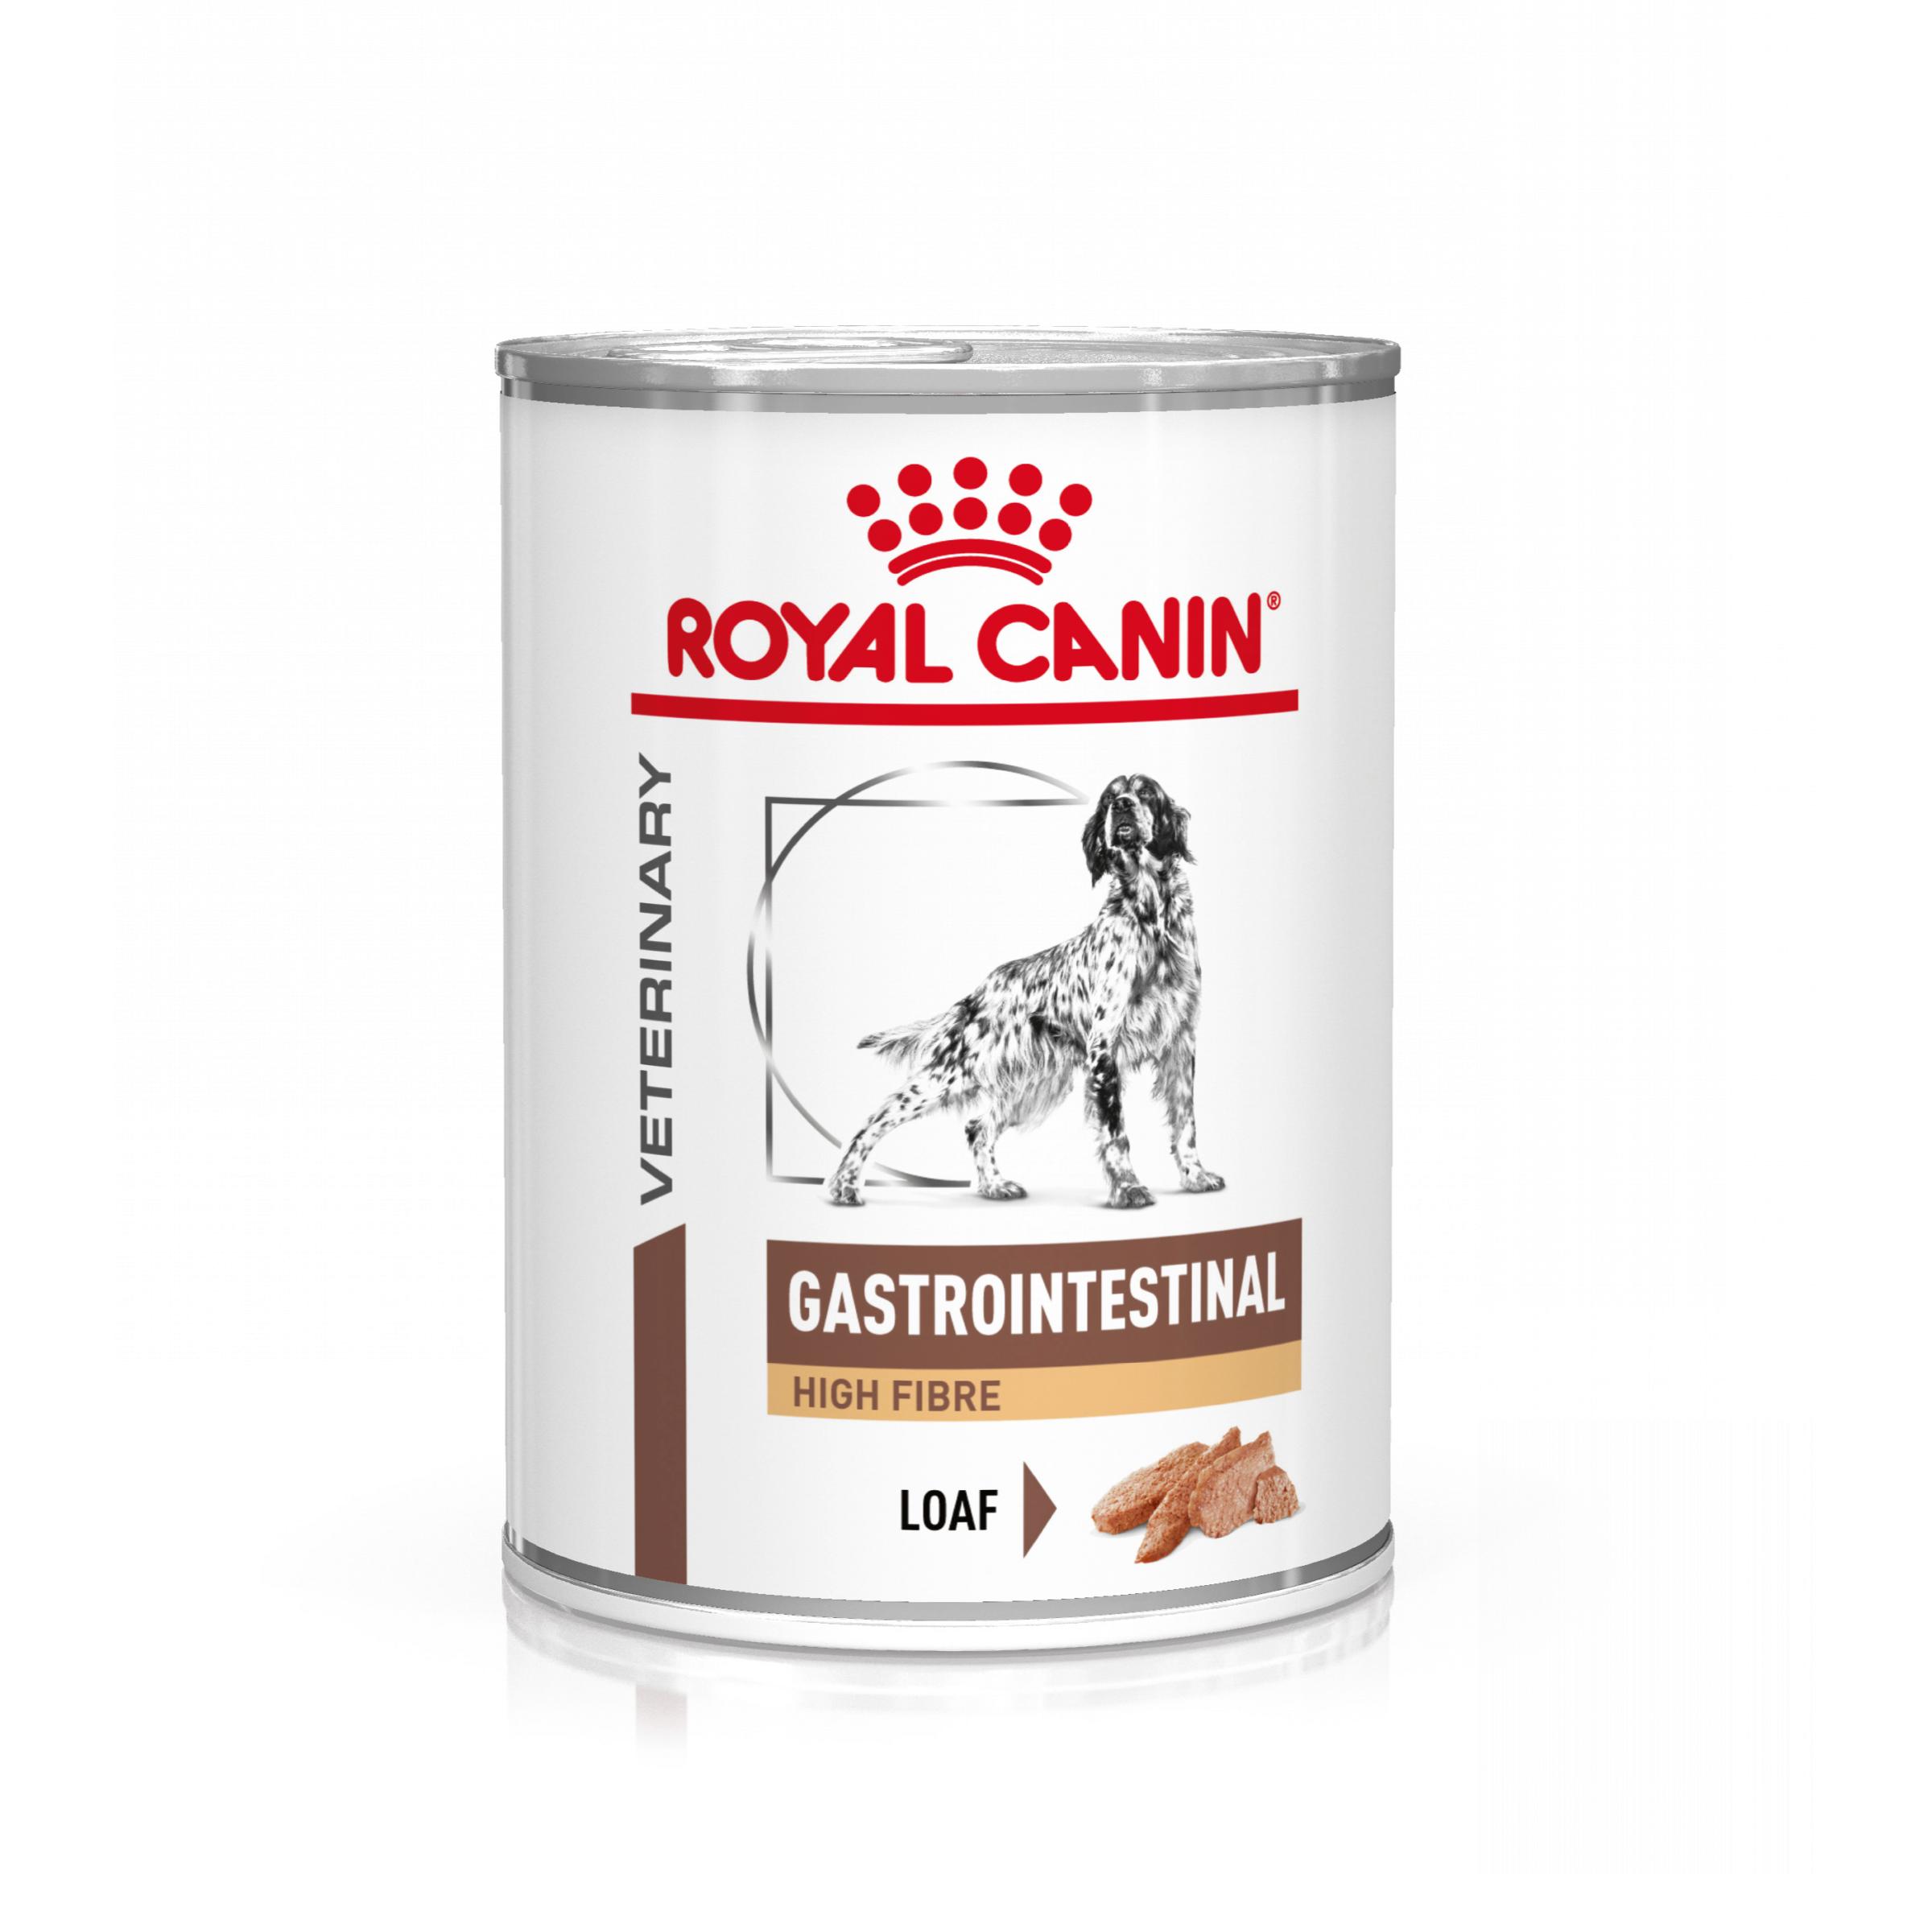 OUTLET - Royal Canin Gastrointestinal High Fibre Hond - blik 410g